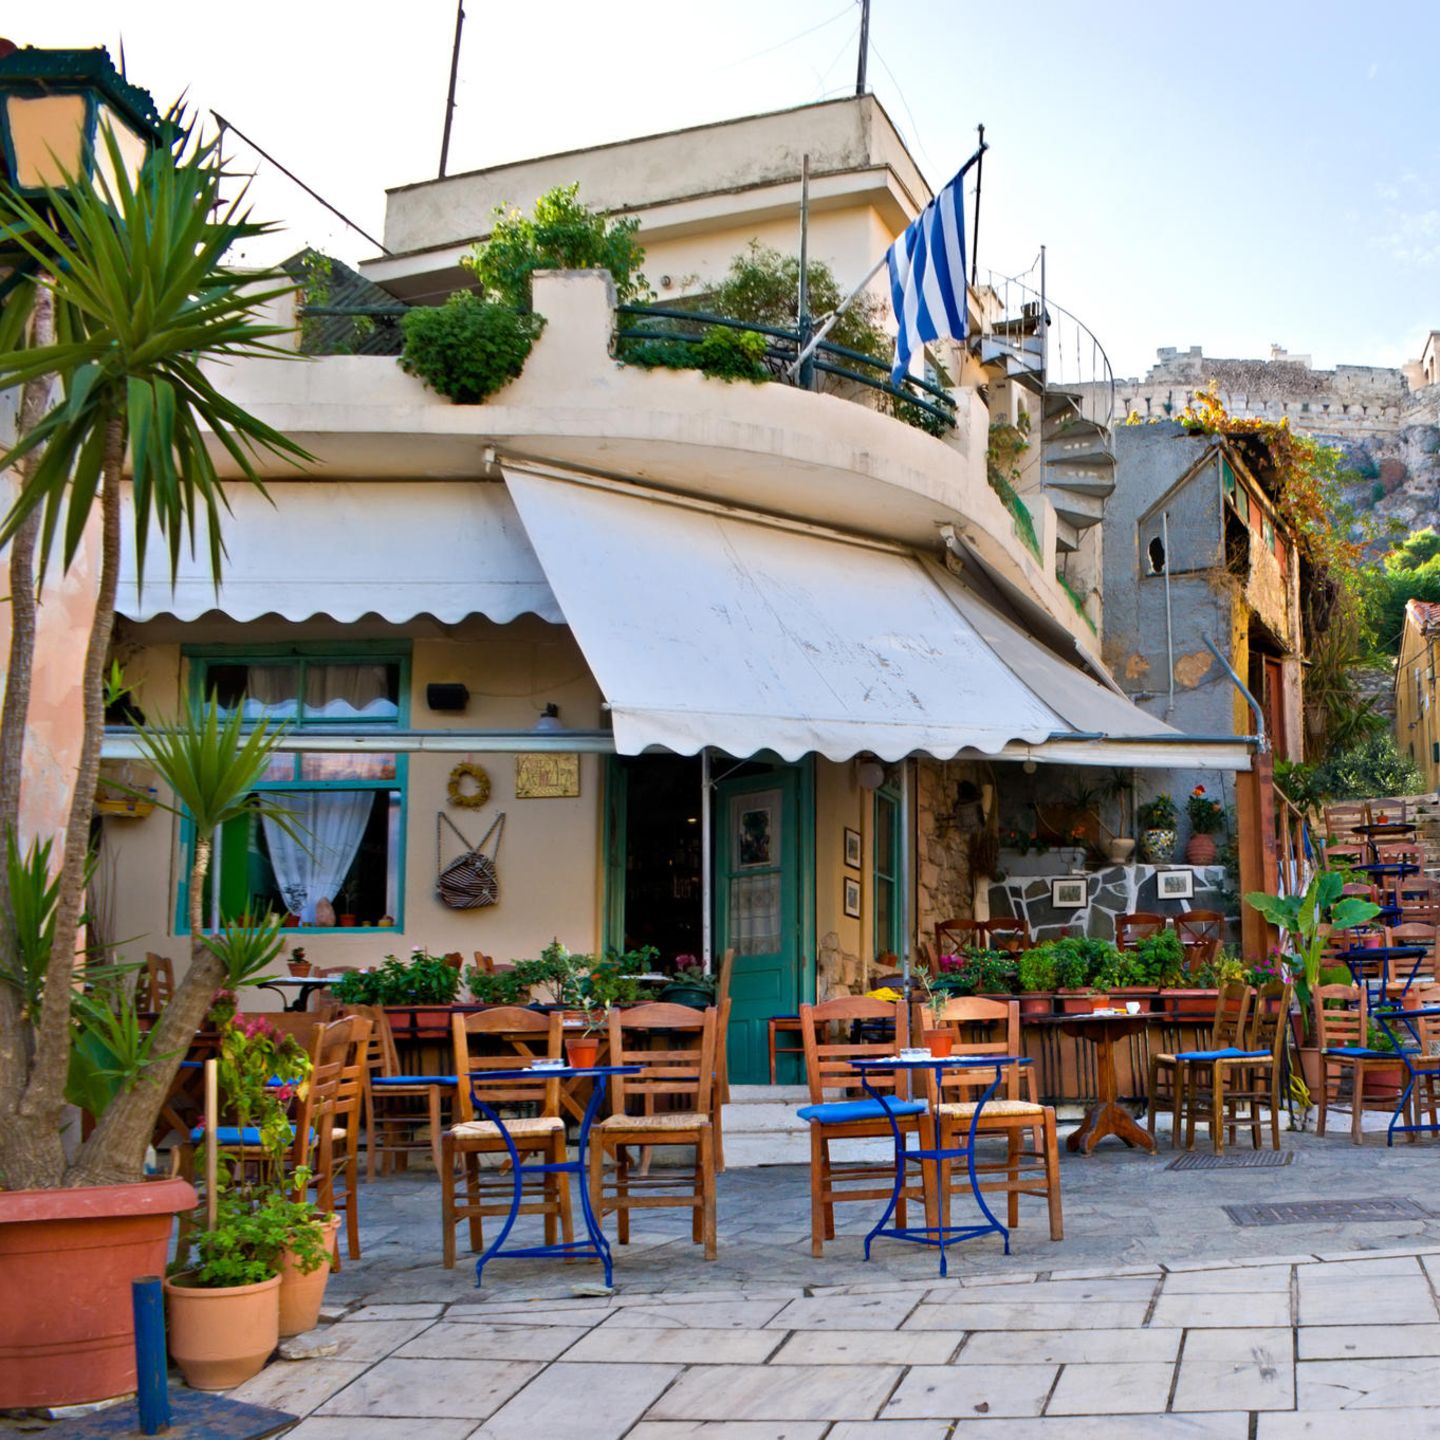 Sommerreiseziele: Athen